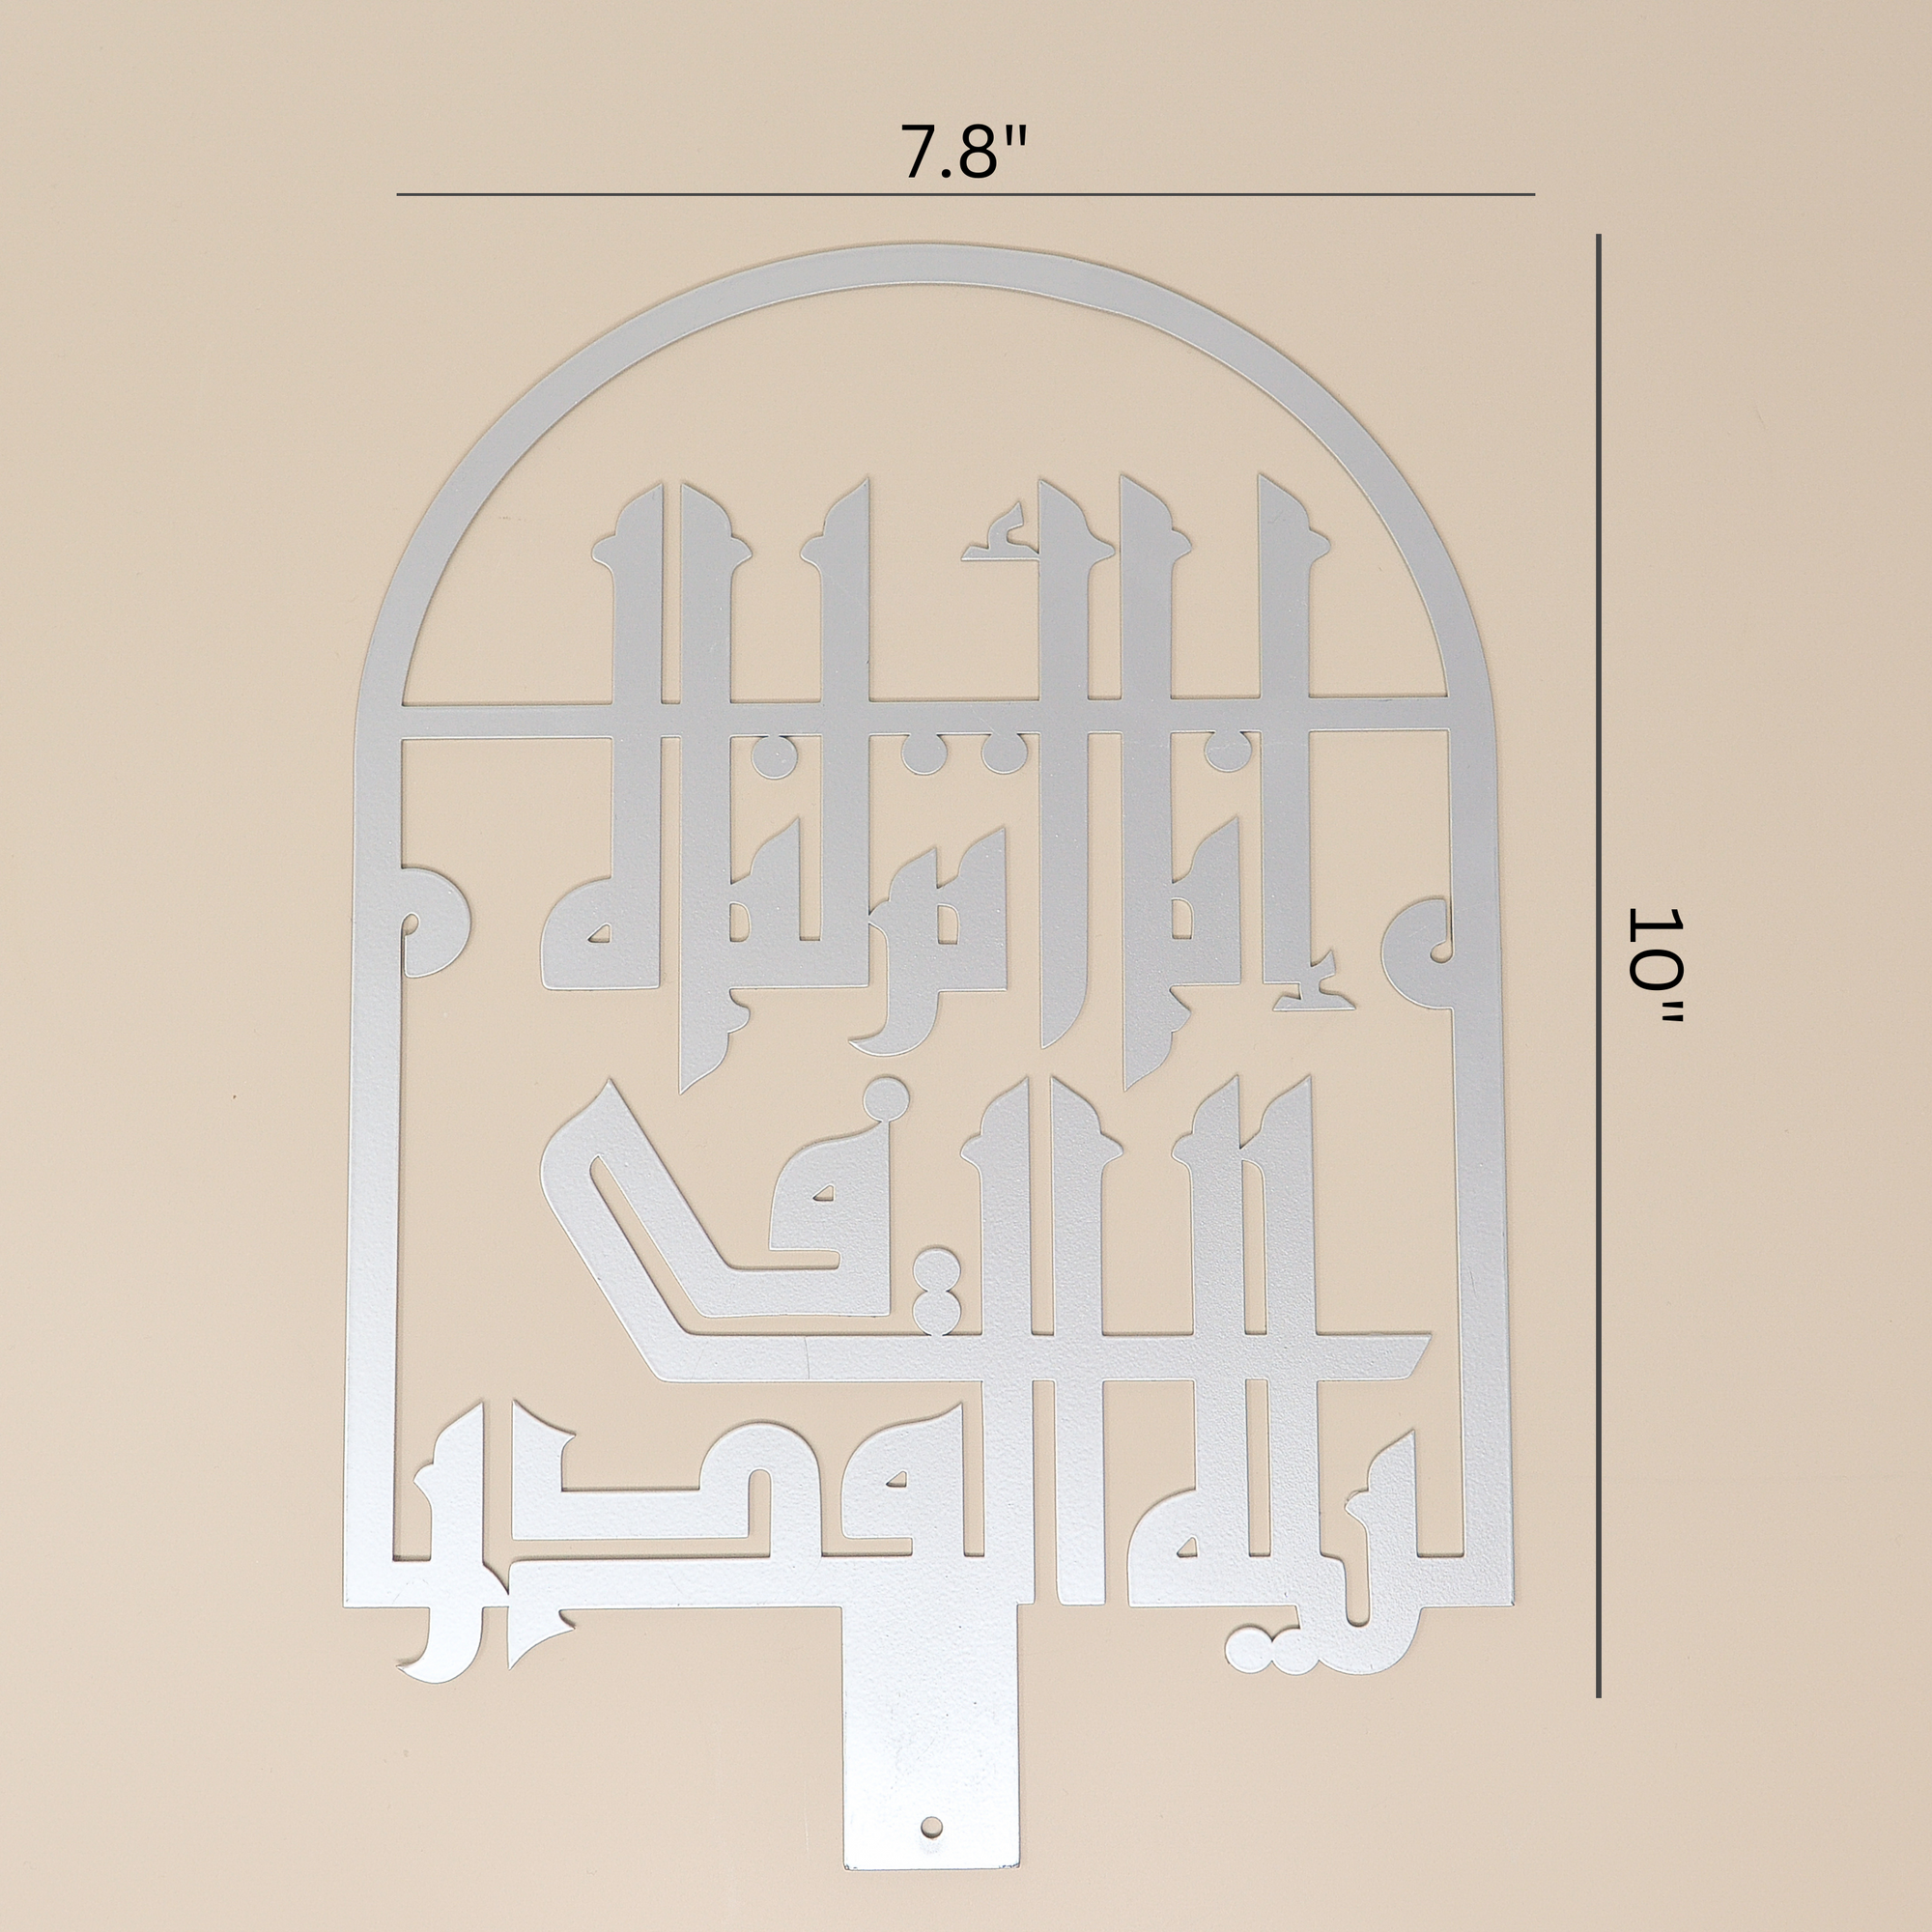 Laylatul Qadr Quranic Verse Calligraphy